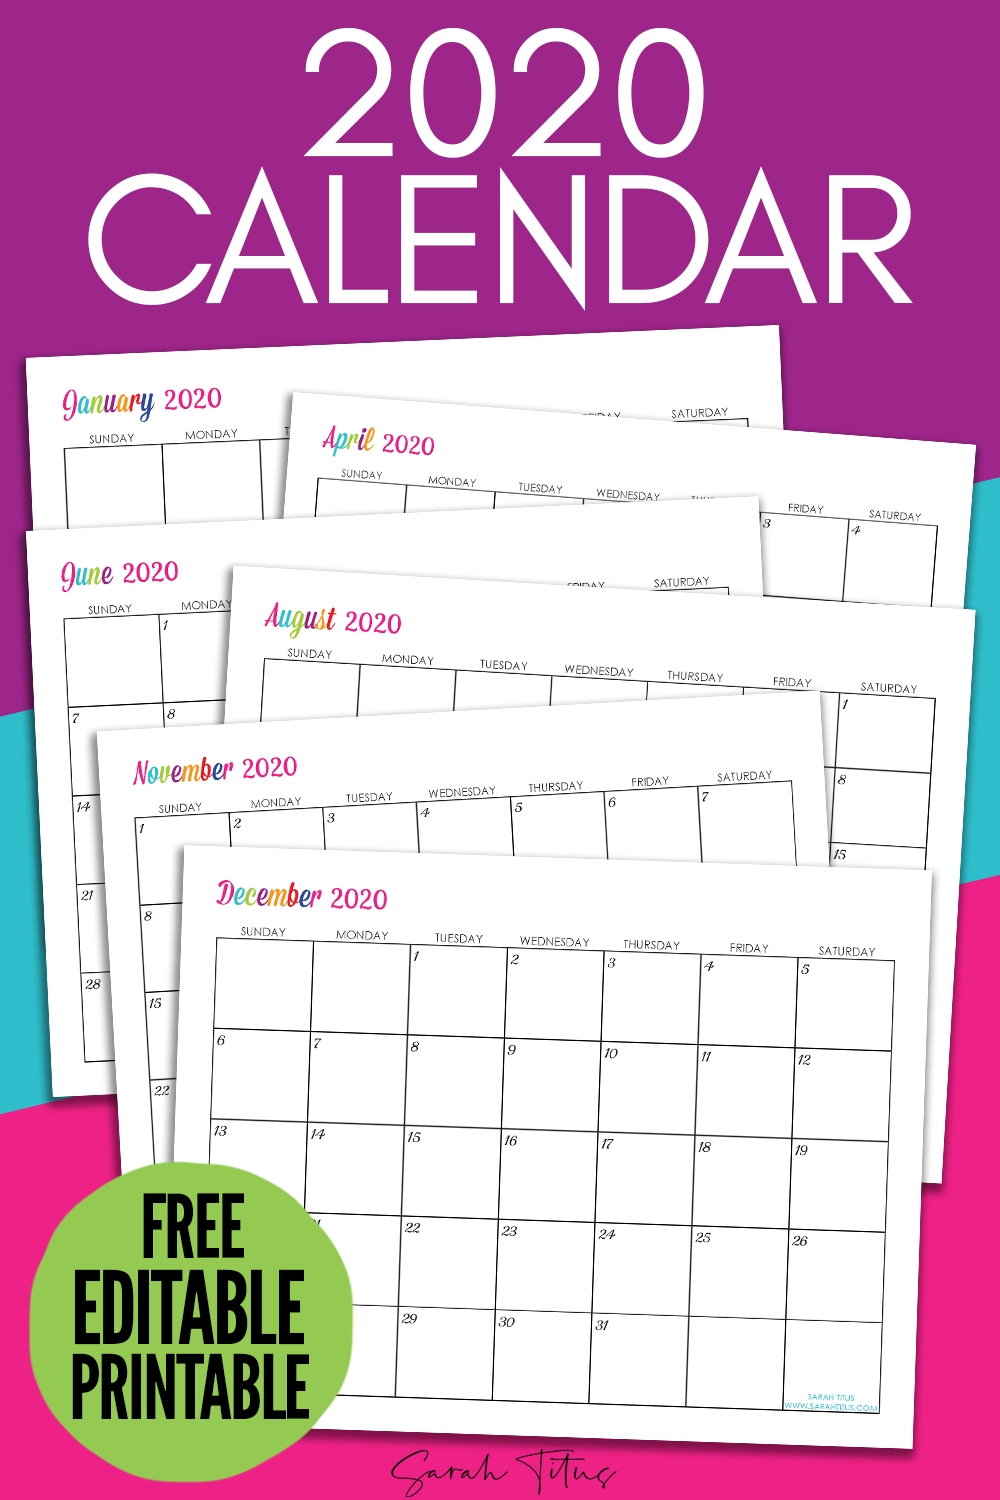 Collect Free Editable Blank Calendar